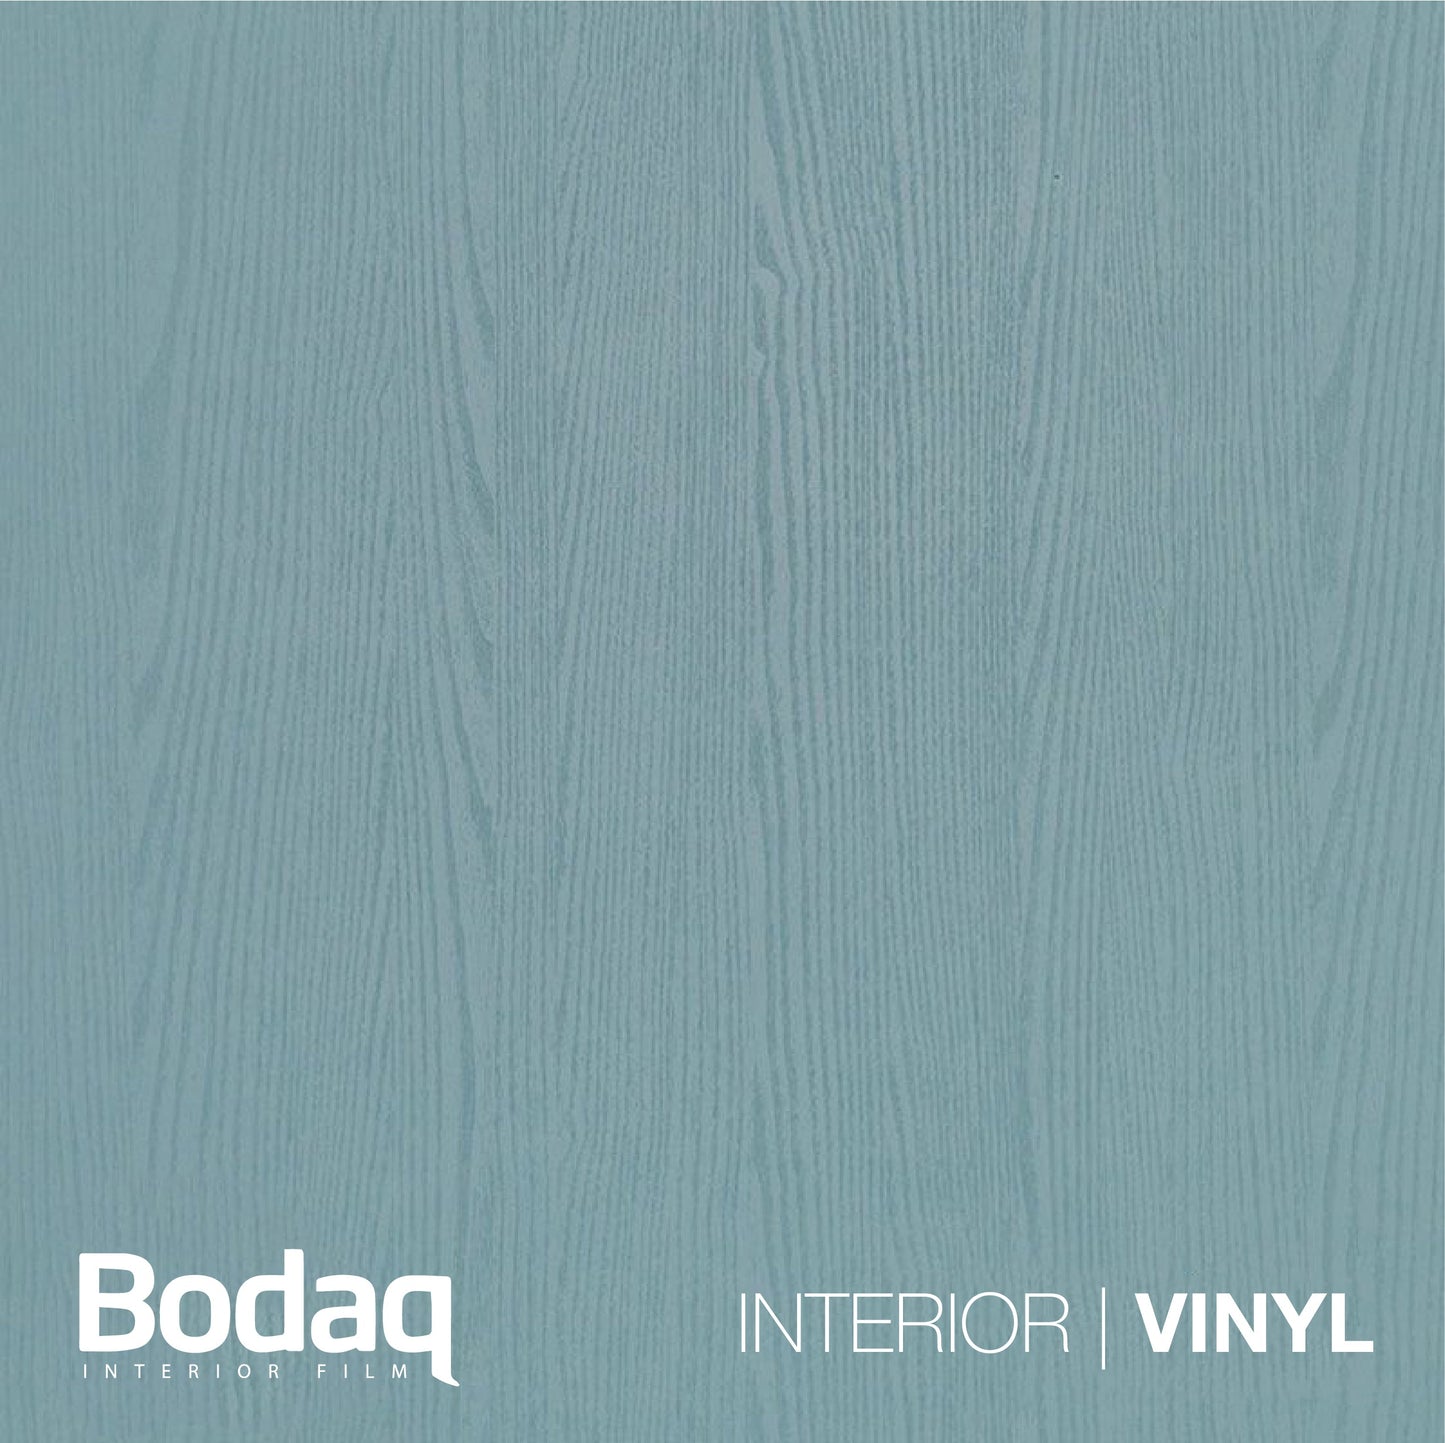 BODAQ Interior Film PTW06 Light Blue Painted Wood - A5 Sample